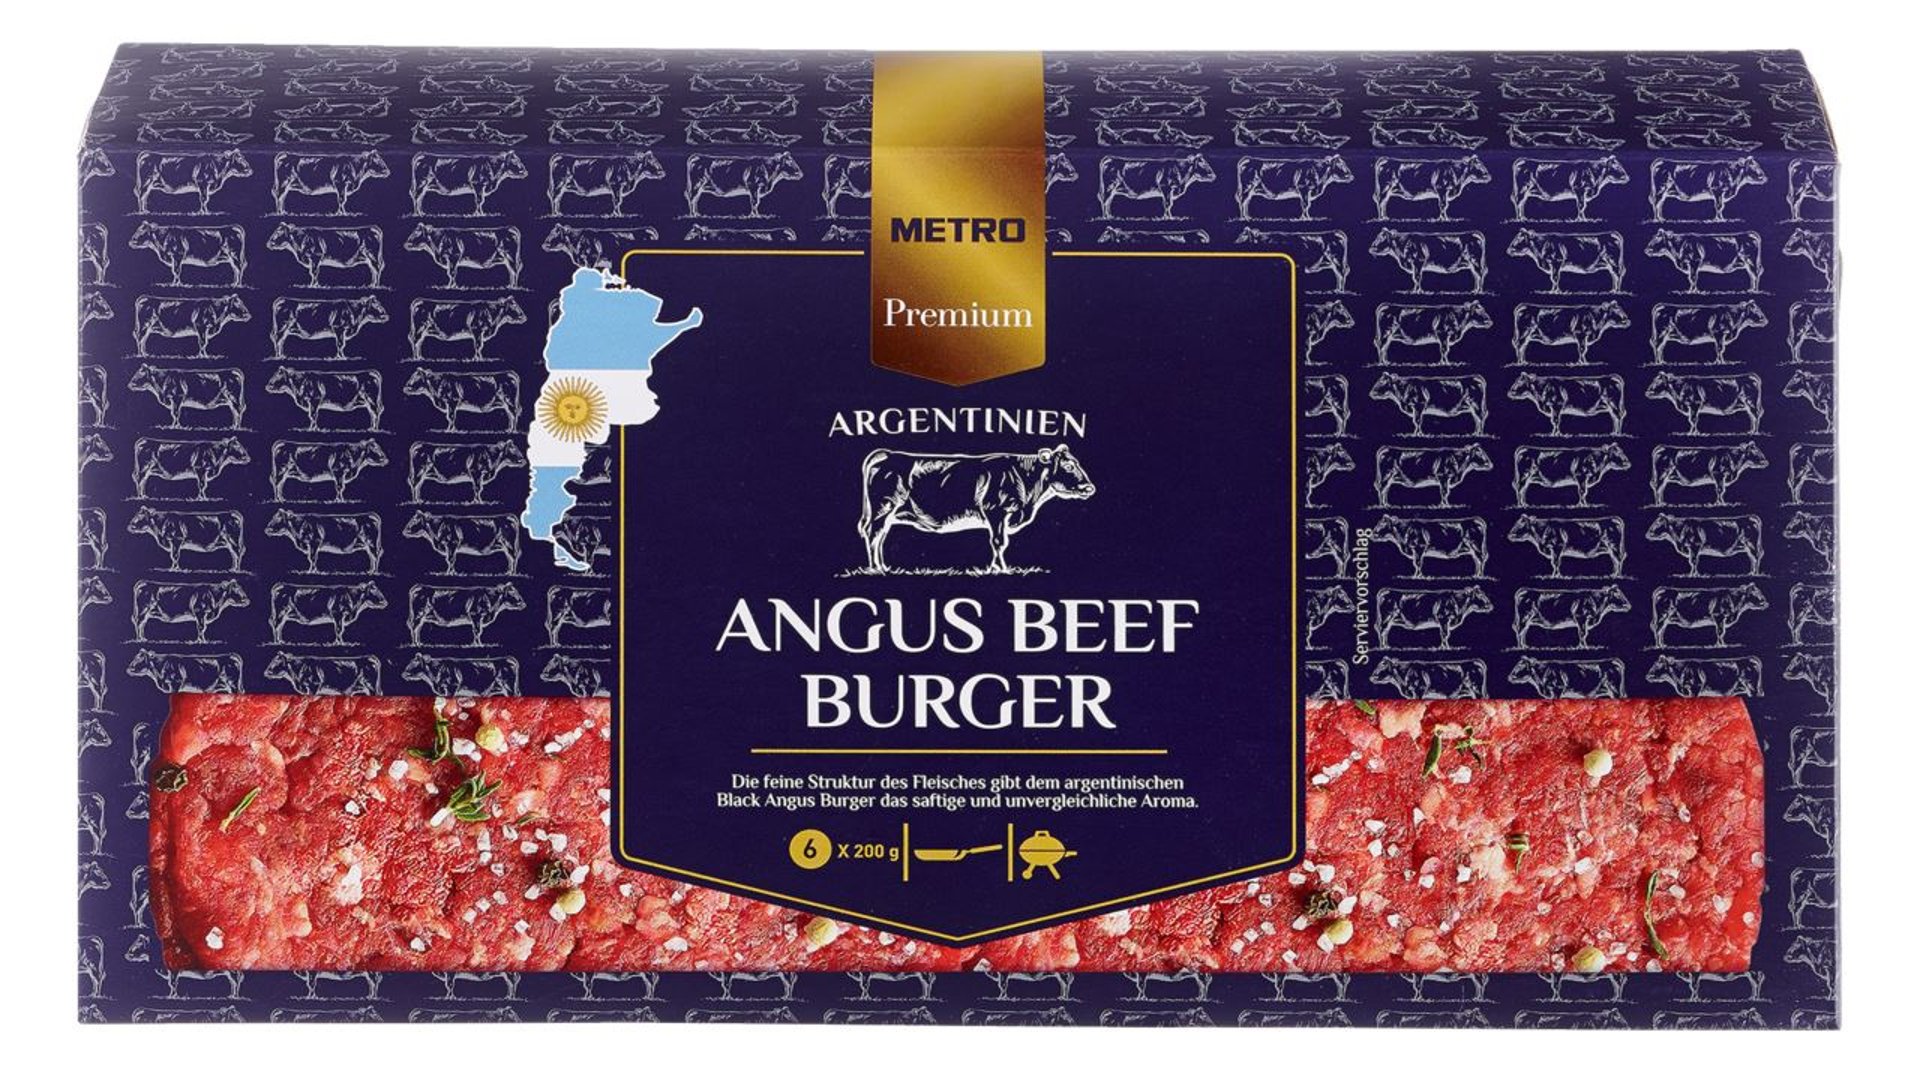 METRO Premium - Angus Beef Burger tiefgefroren, 6 Stück à 200 g - 1,2 kg Packung